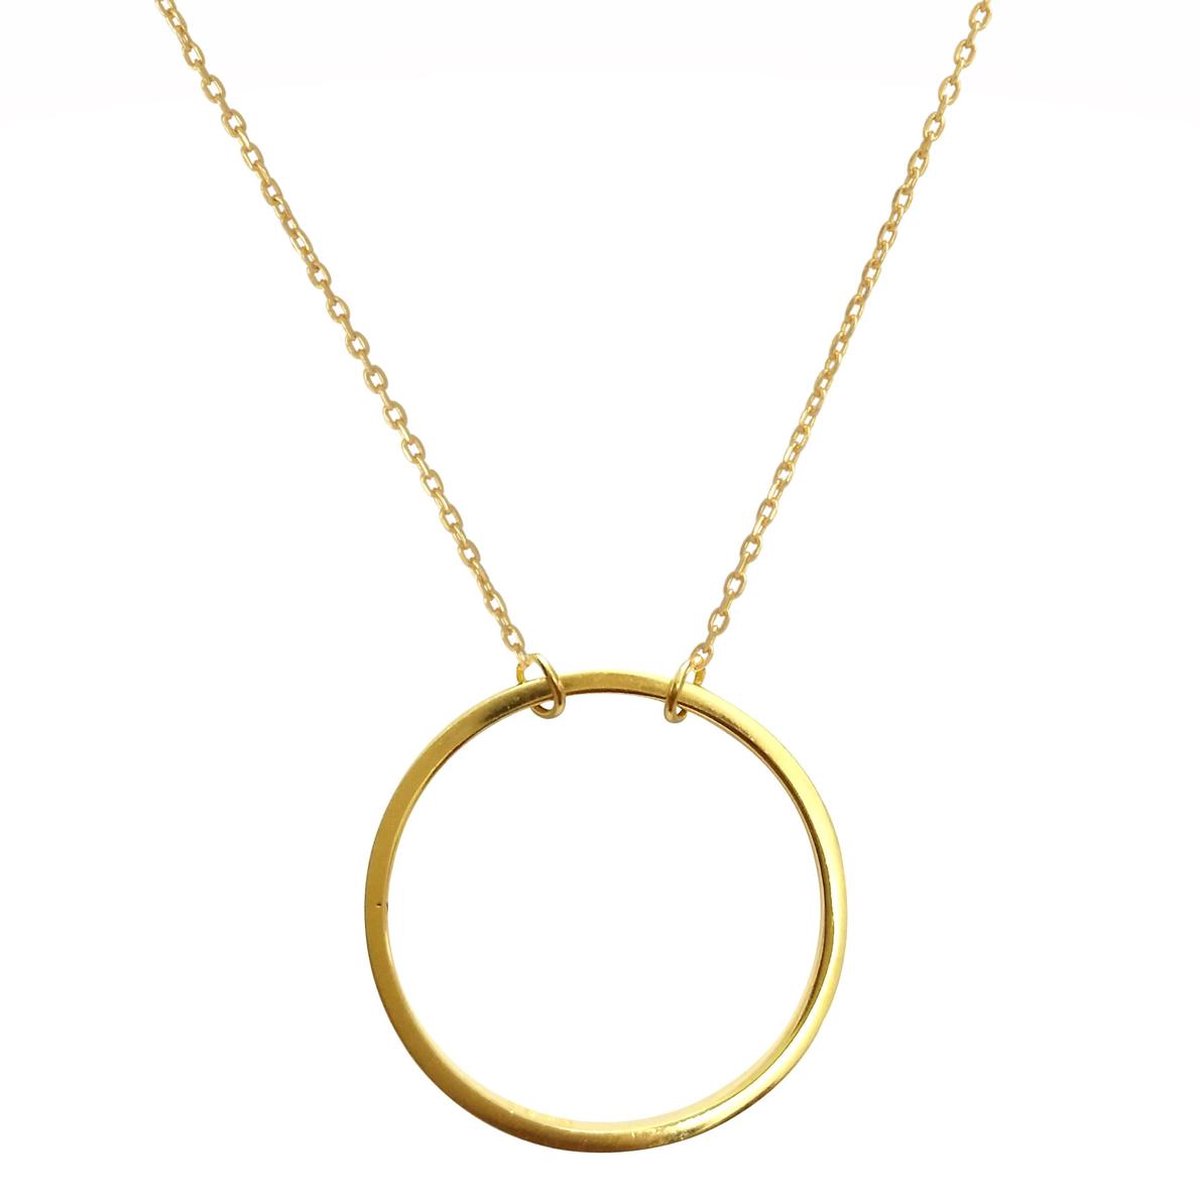 Fate Jewellery Ketting FJ477 – Cirkel – 925 Zilver, Goud verguld – 45cm + 5cm